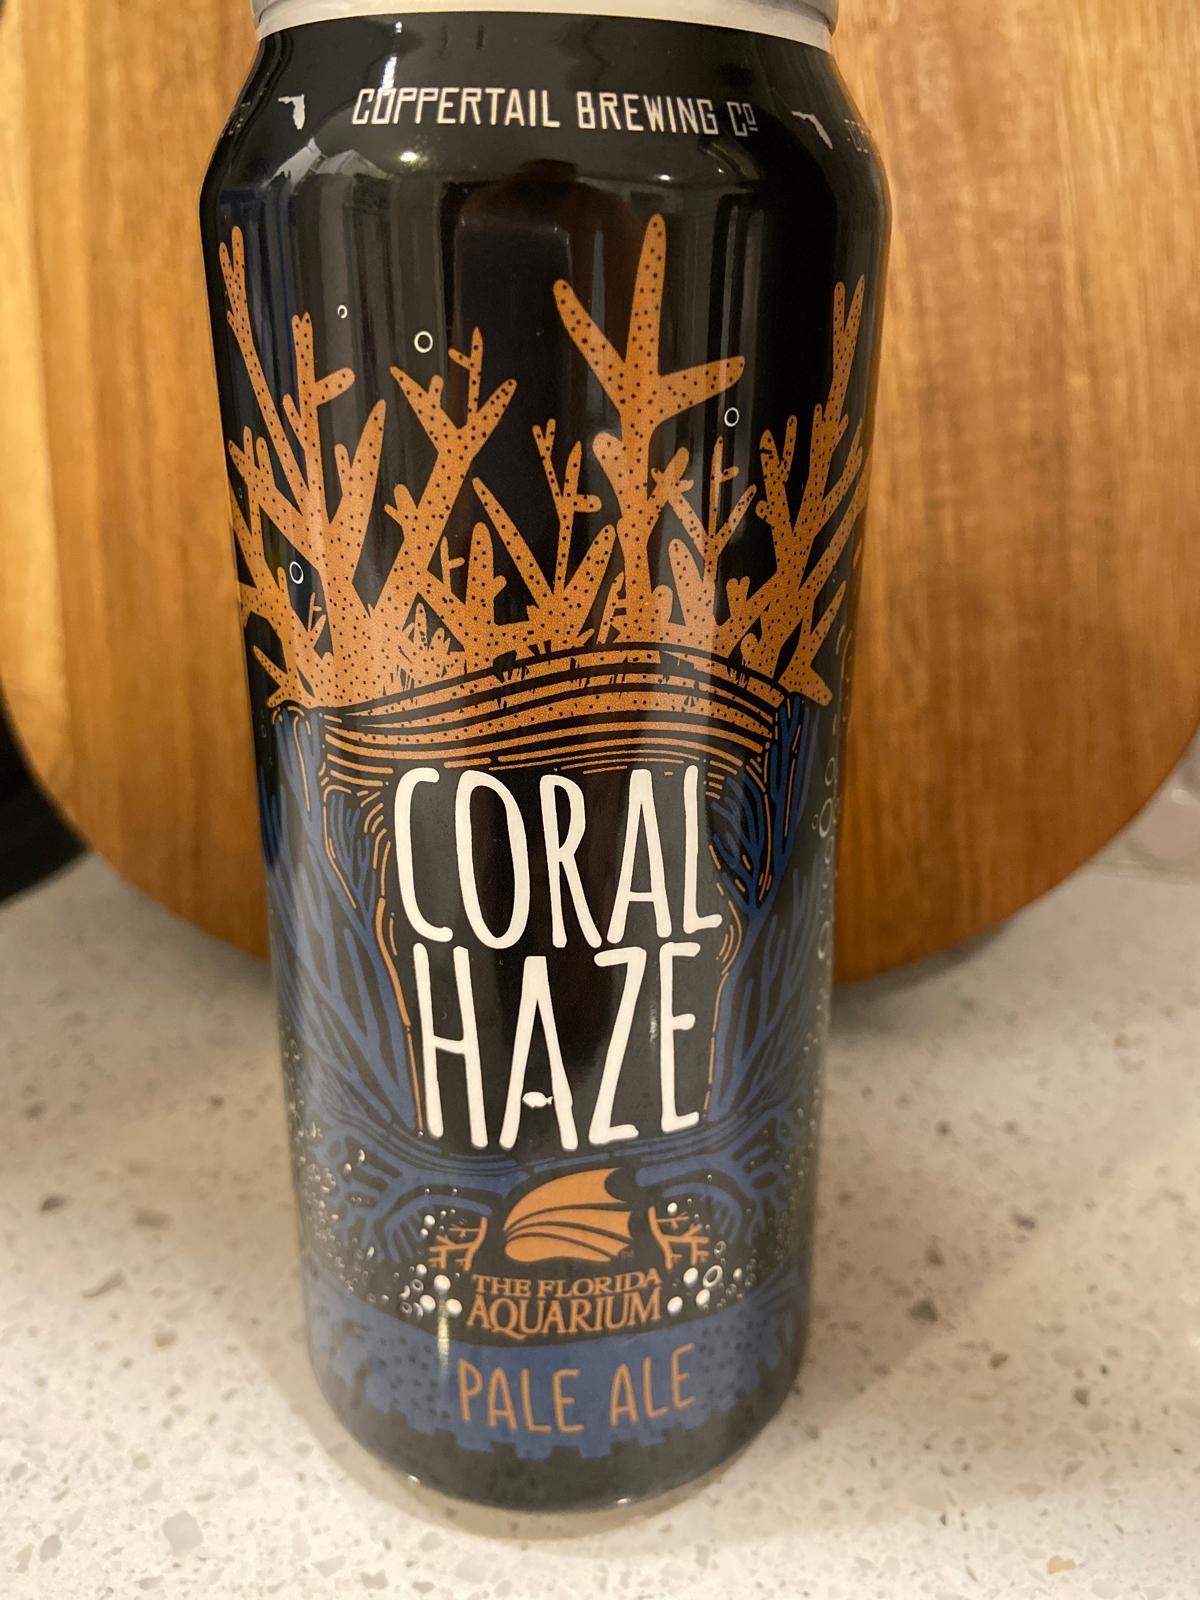 Coral Haze